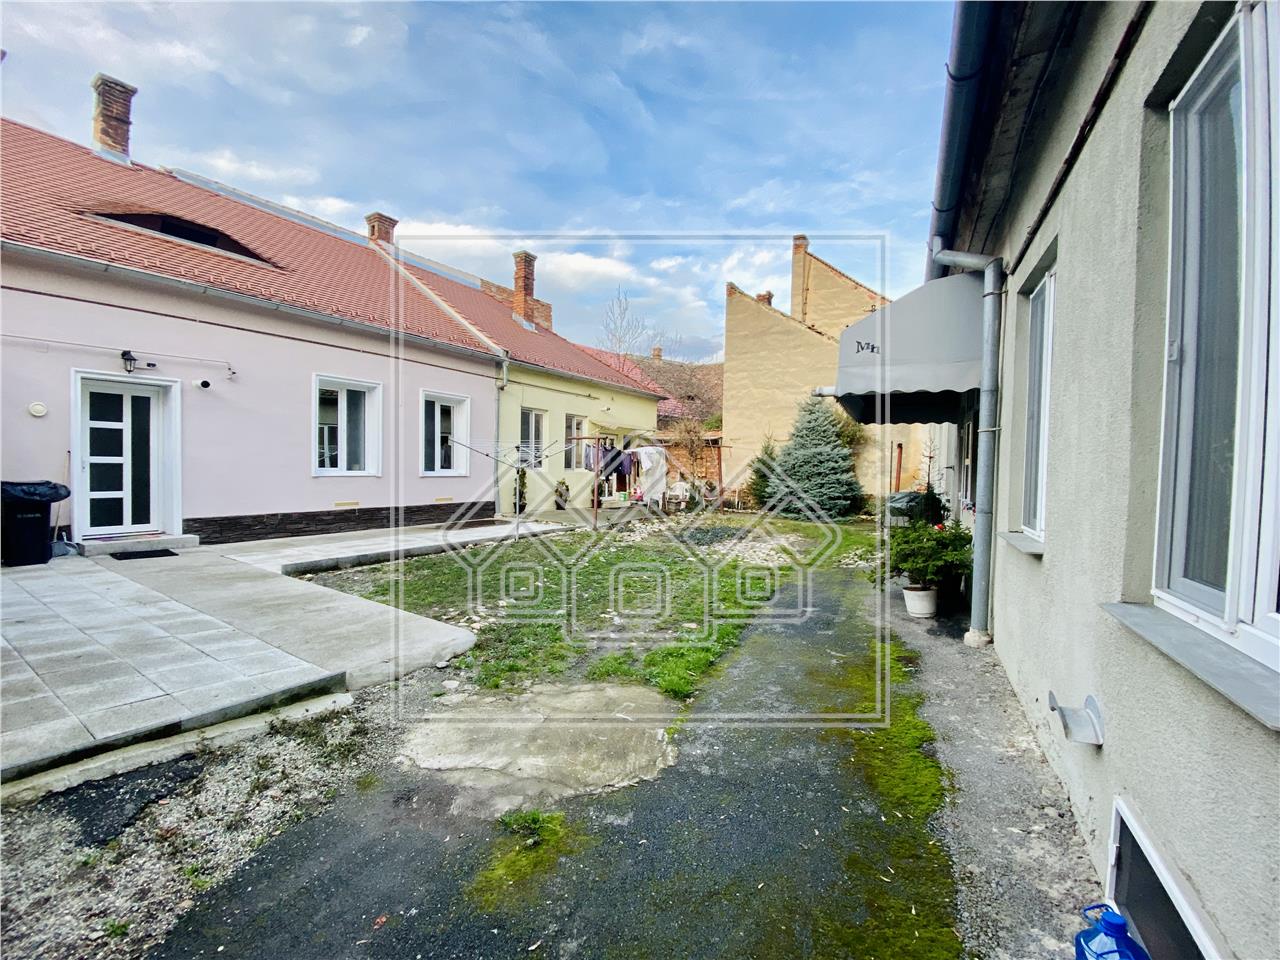 Imobil de vanzare in Sibiu - 120 mp utili - Apartament + Garsoniera